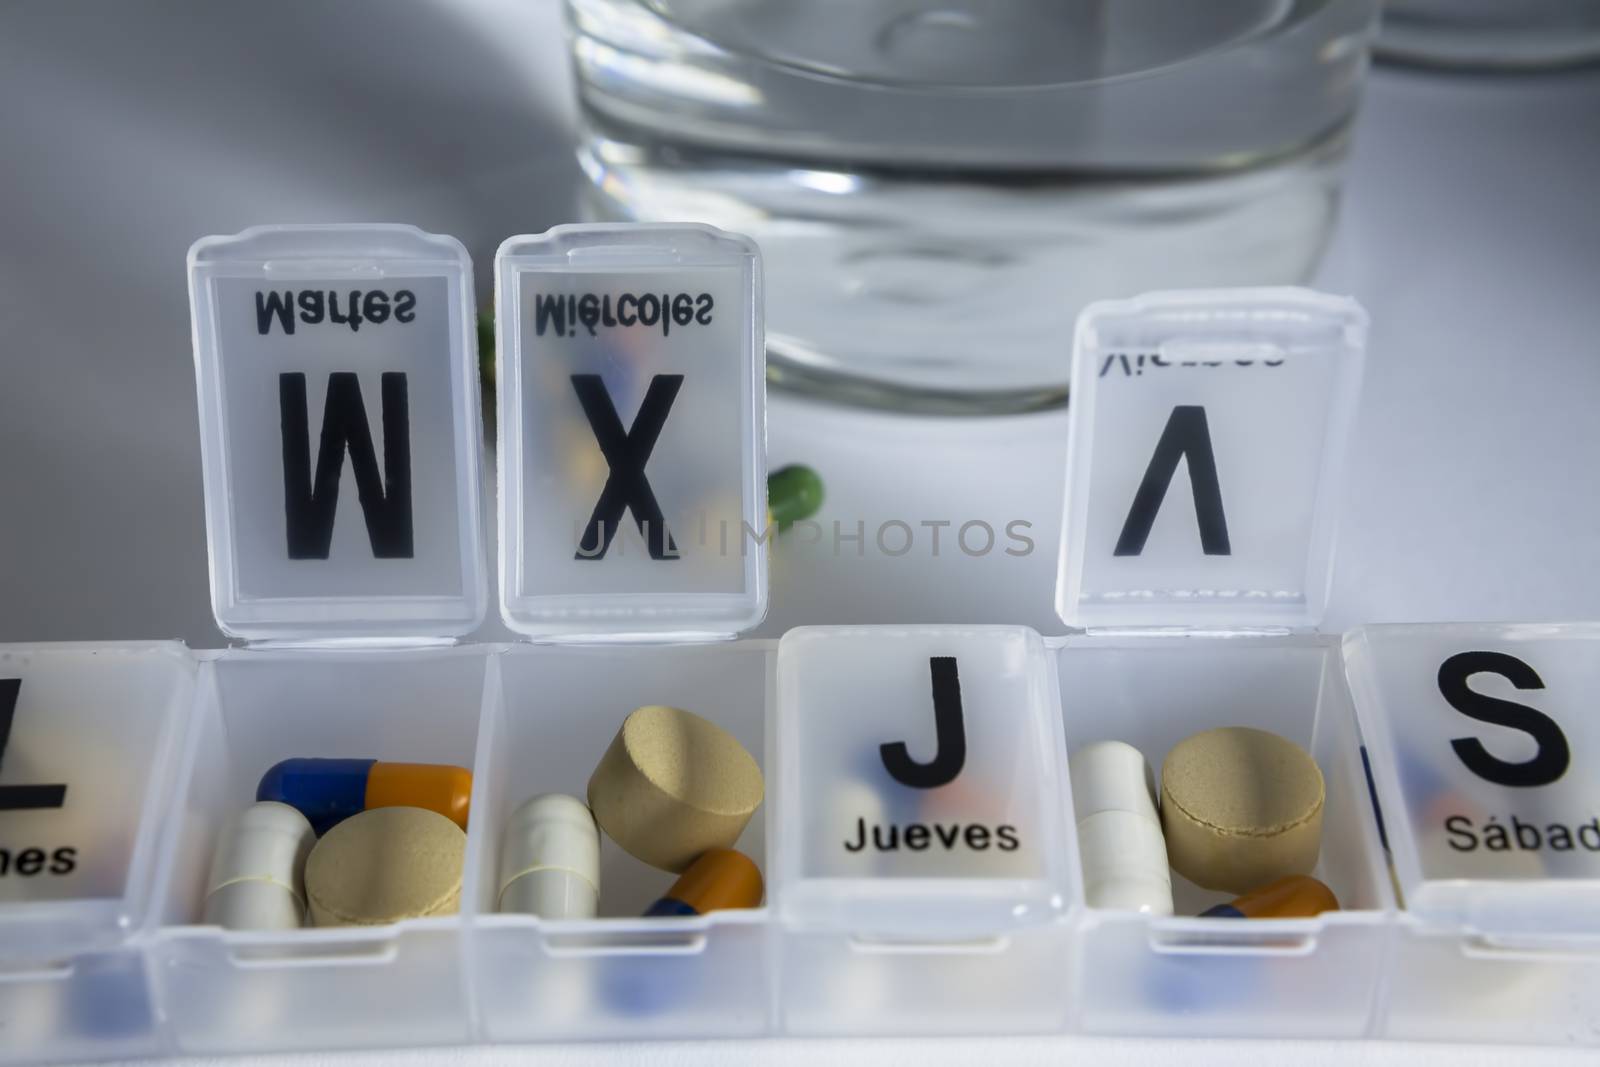 Pills with pill organizer, writing in Spanish